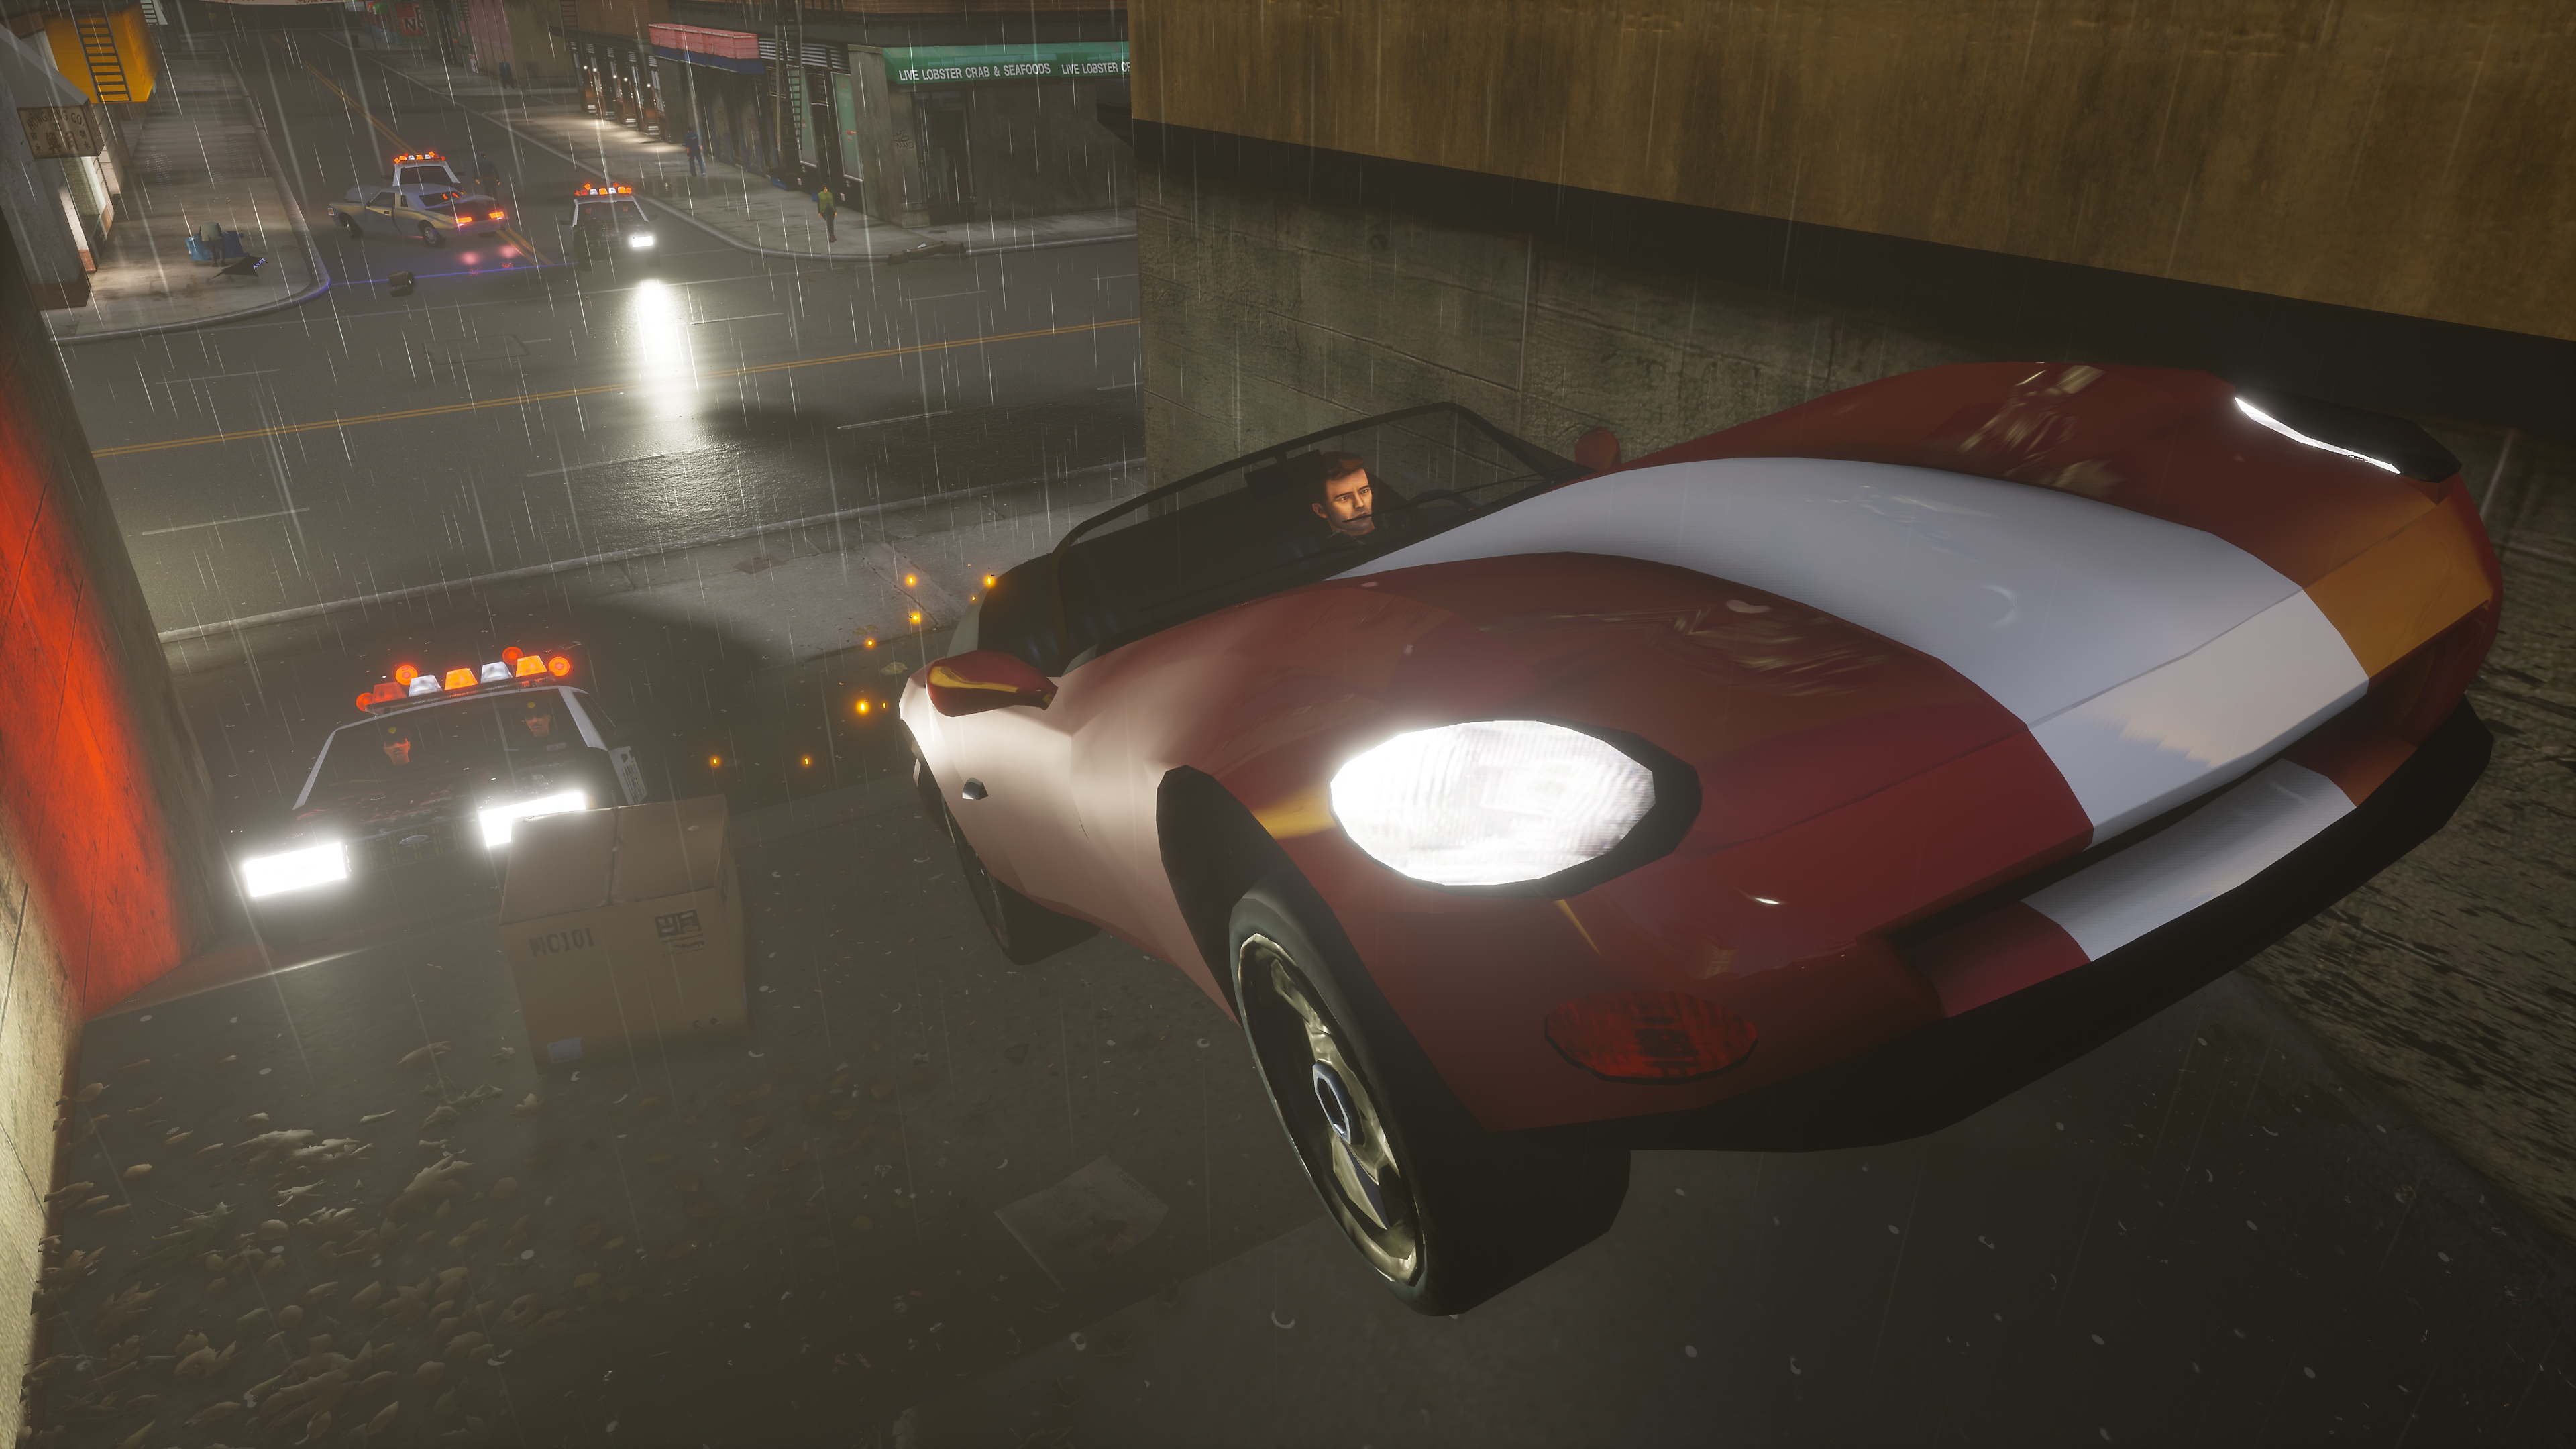  Grand Theft Auto III – снимок экрана 2 из галереи